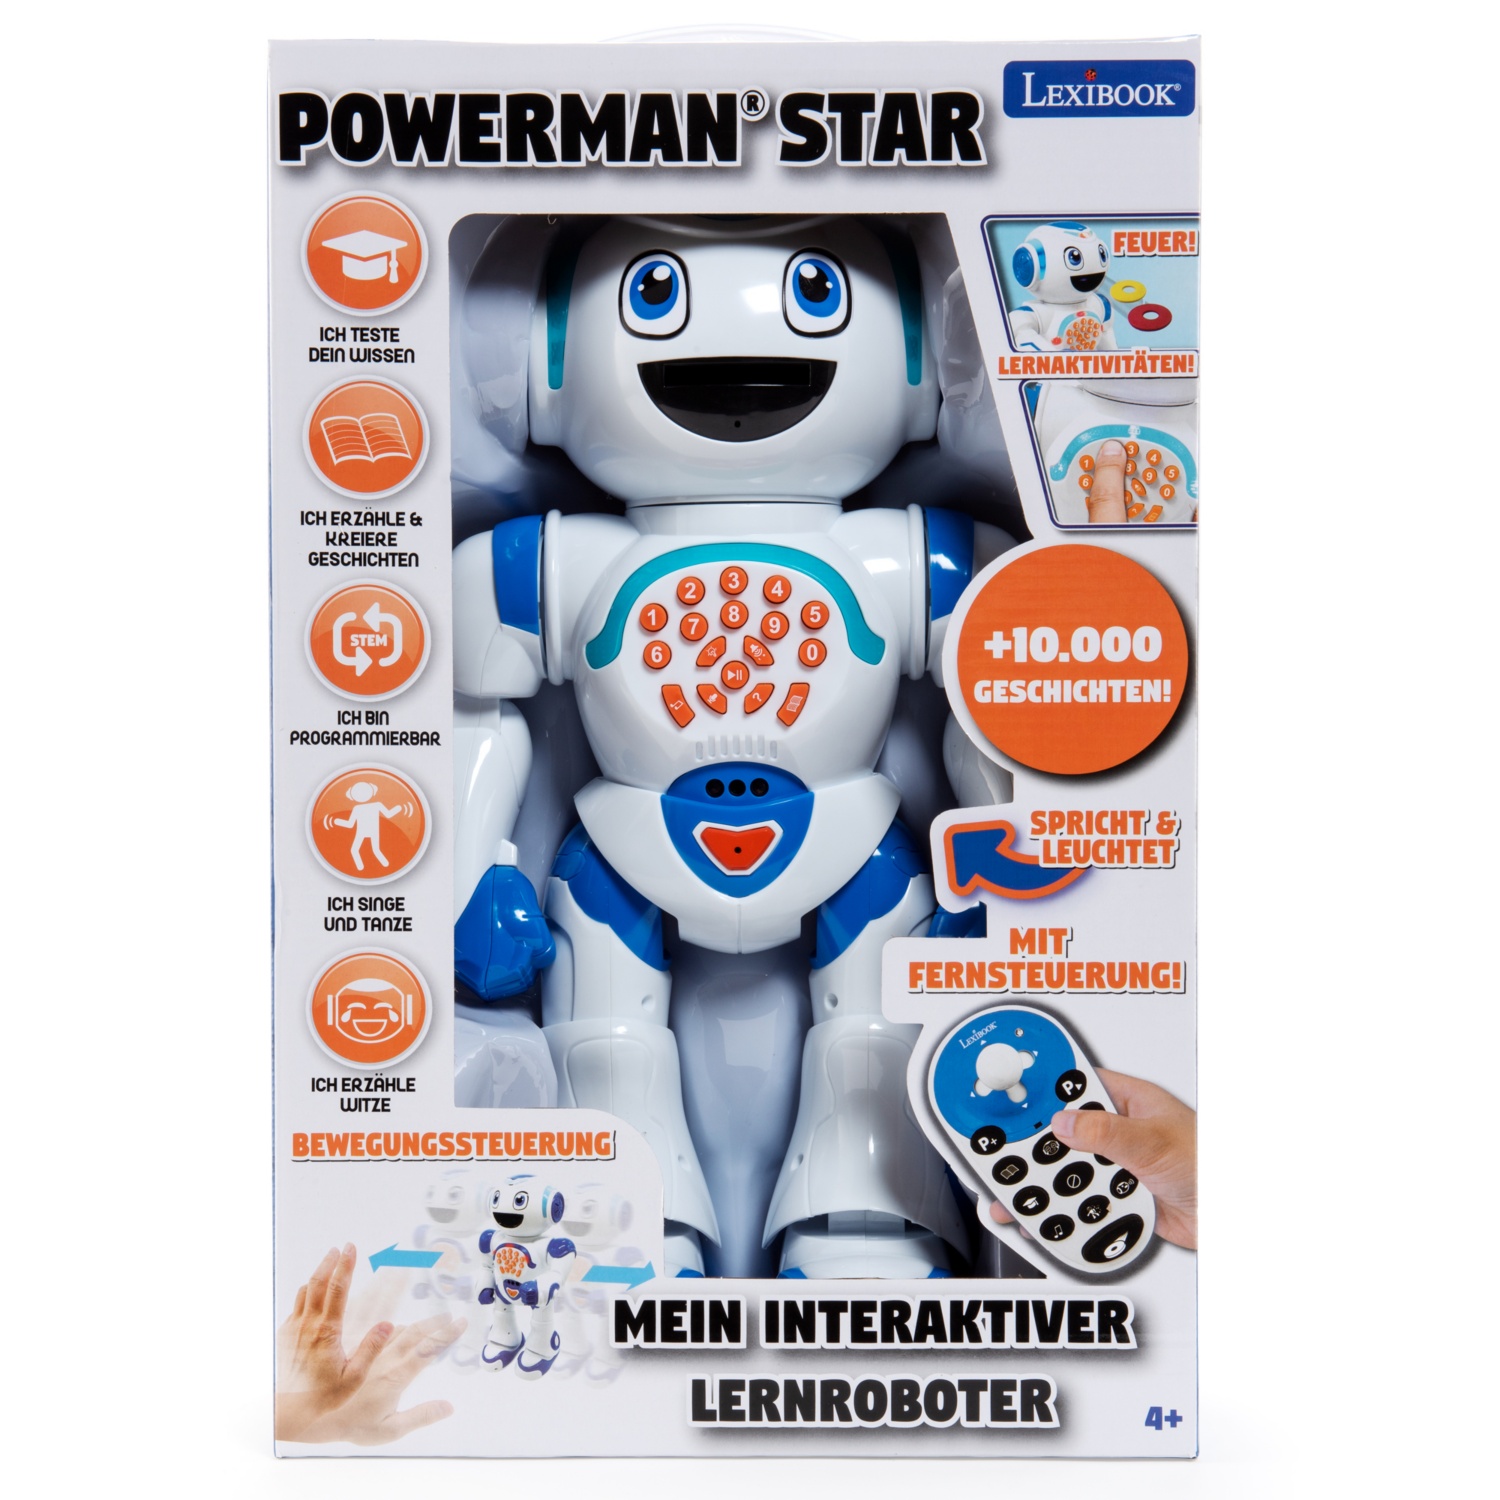 LEXIBOOK Lernroboter Powerman Star